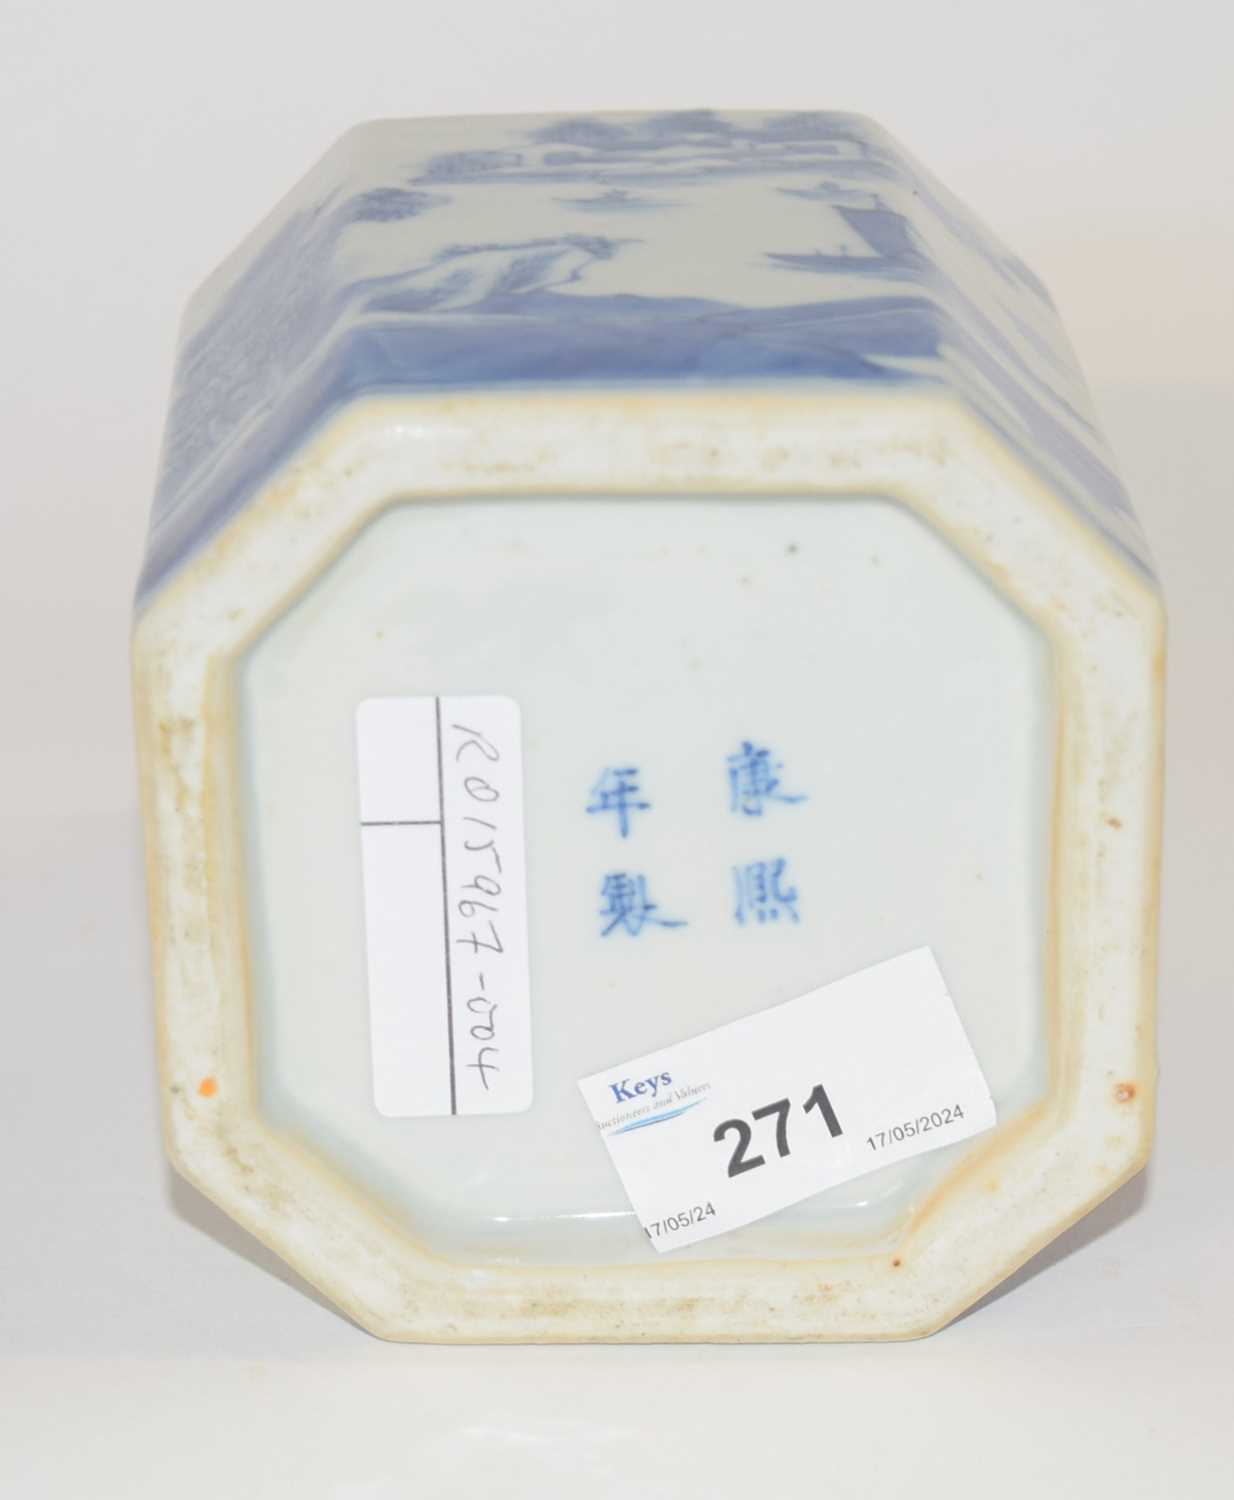 19th century Chinese Porcelain Octagonal Jar - Image 2 of 2